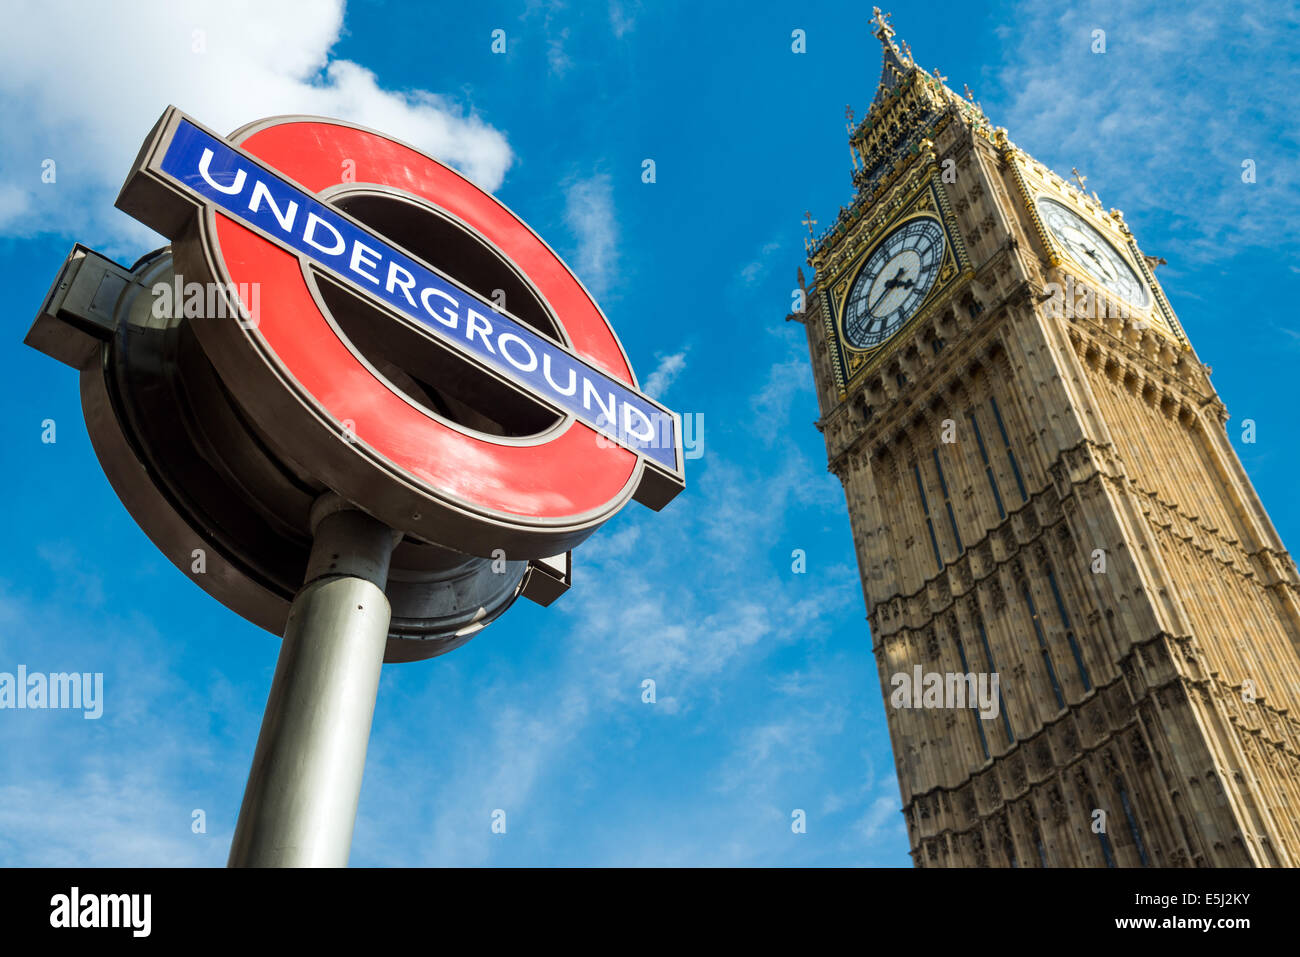 London Underground sign et Big Ben, London, England, UK Banque D'Images